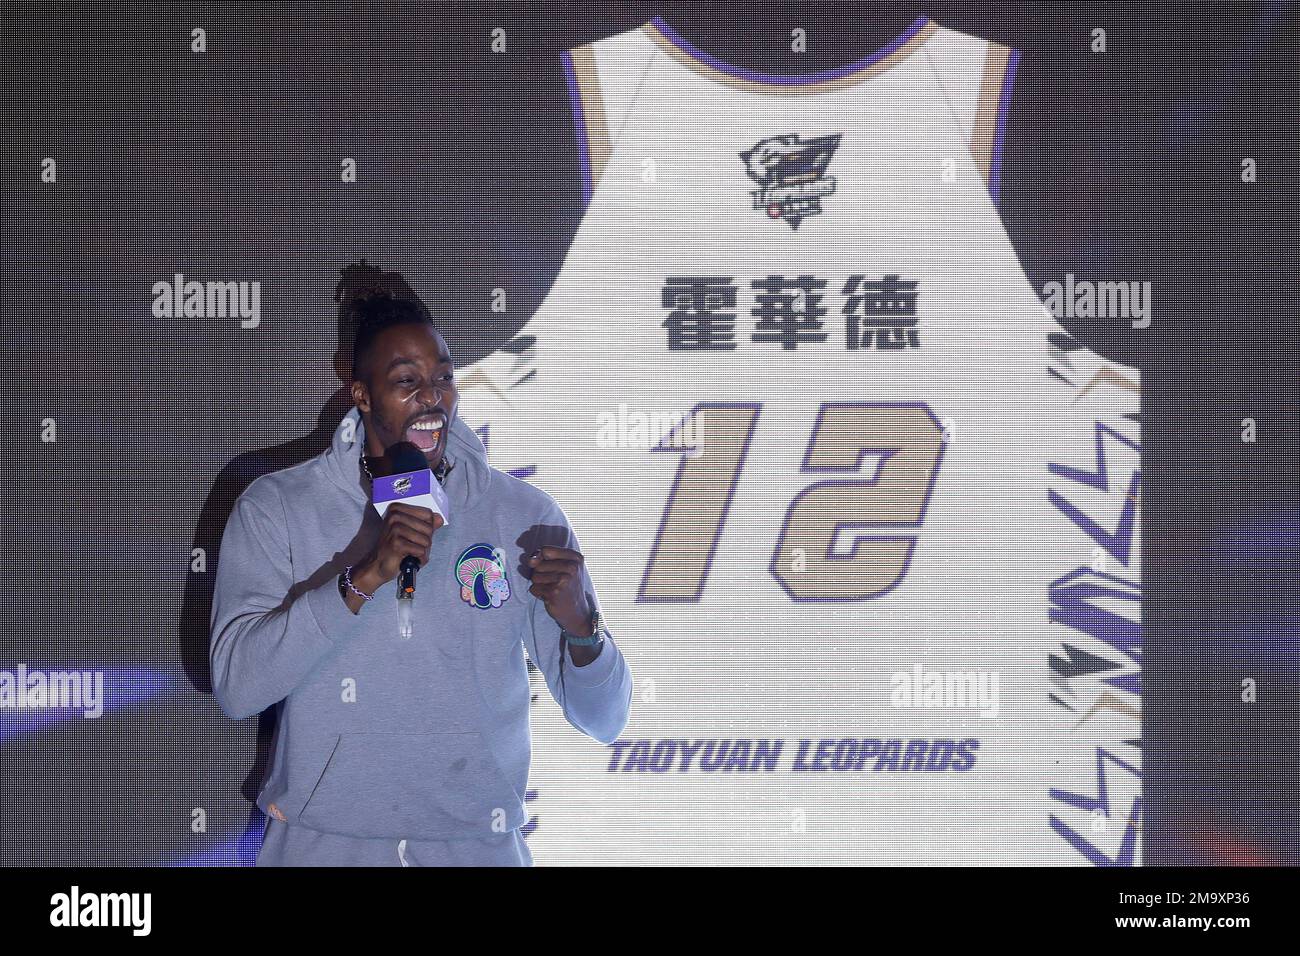 Dwight Howard #12 Taiwan Taoyuan Basketball Jersey Printed Custom Name